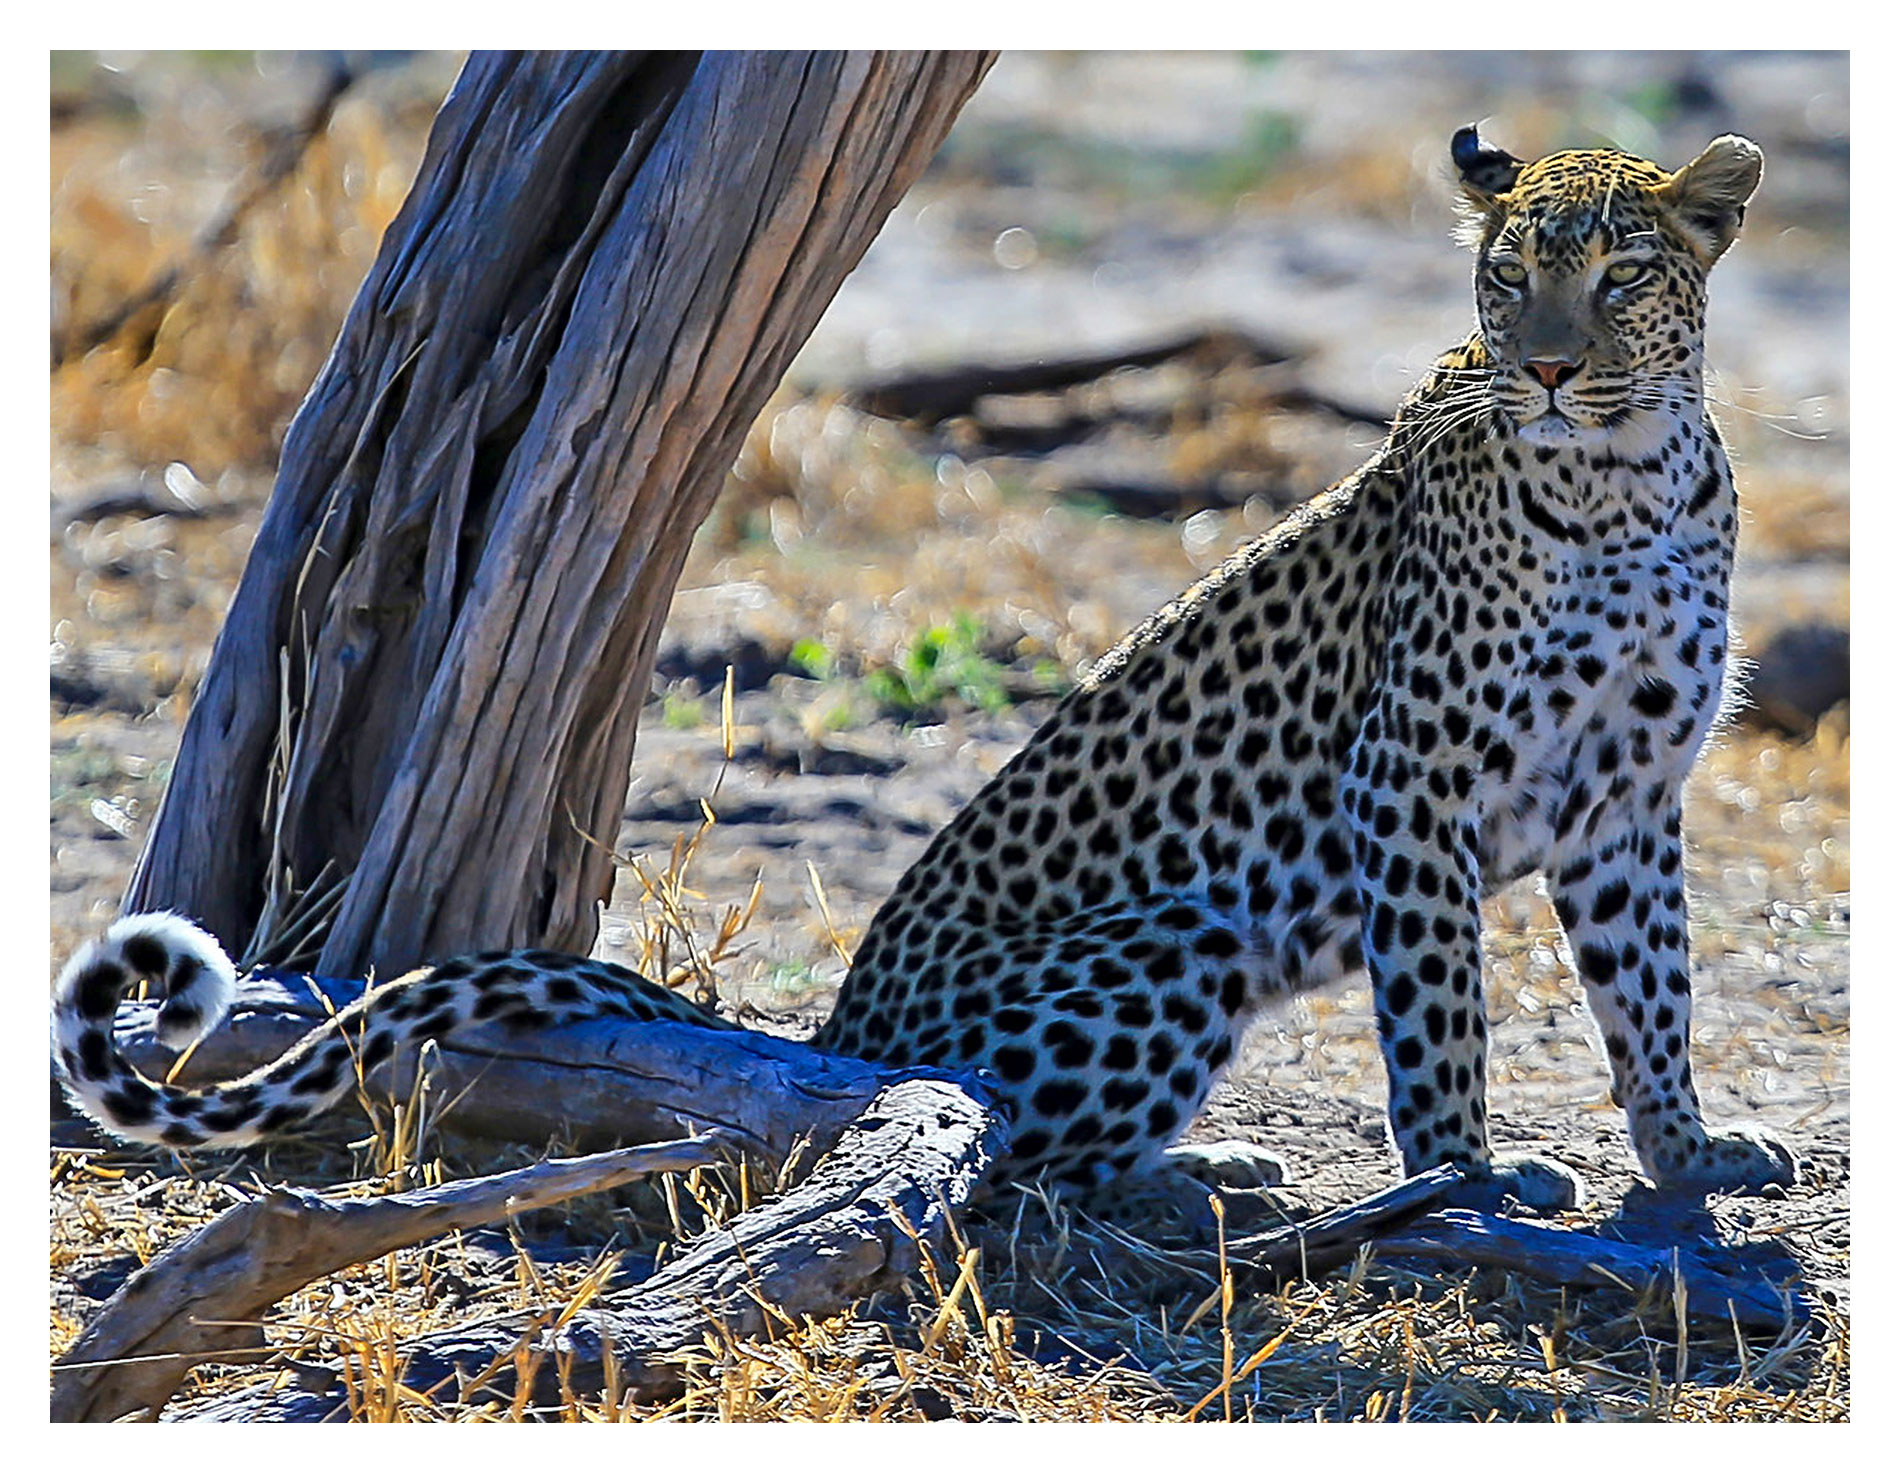 Stunning photographs of Ron Cooper's African Safari....